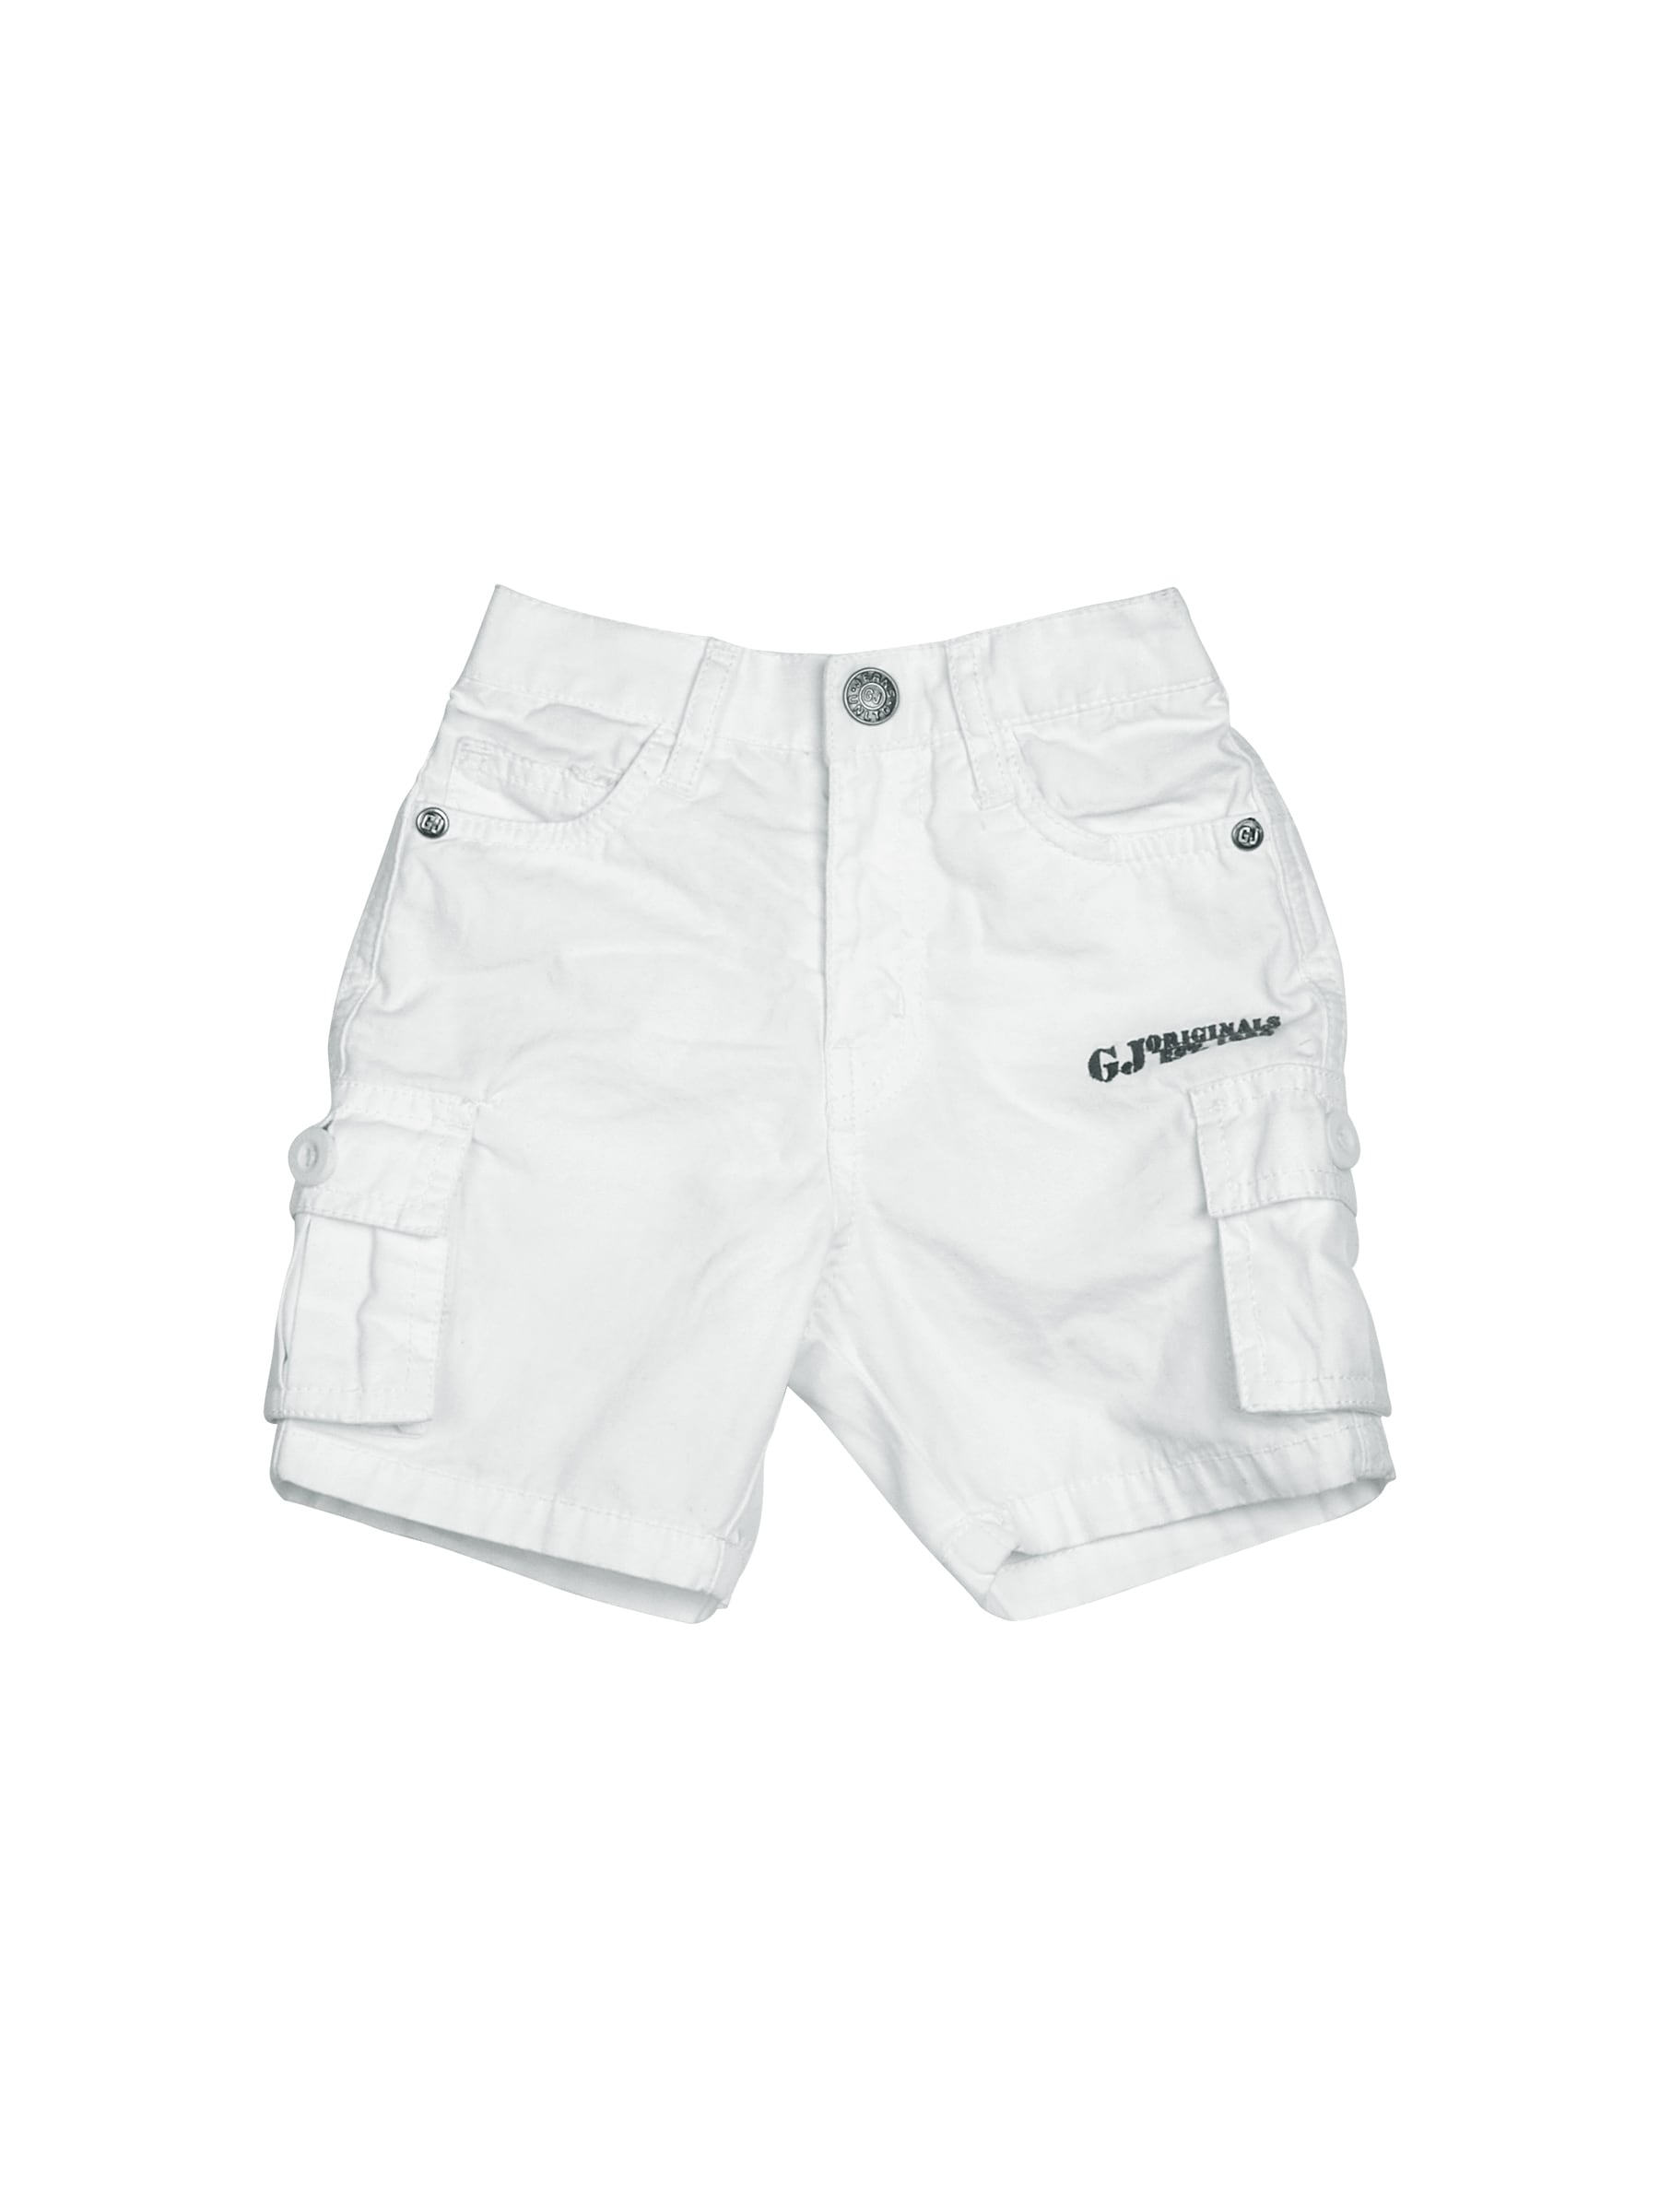 Gini and Jony Men Solid White Shorts